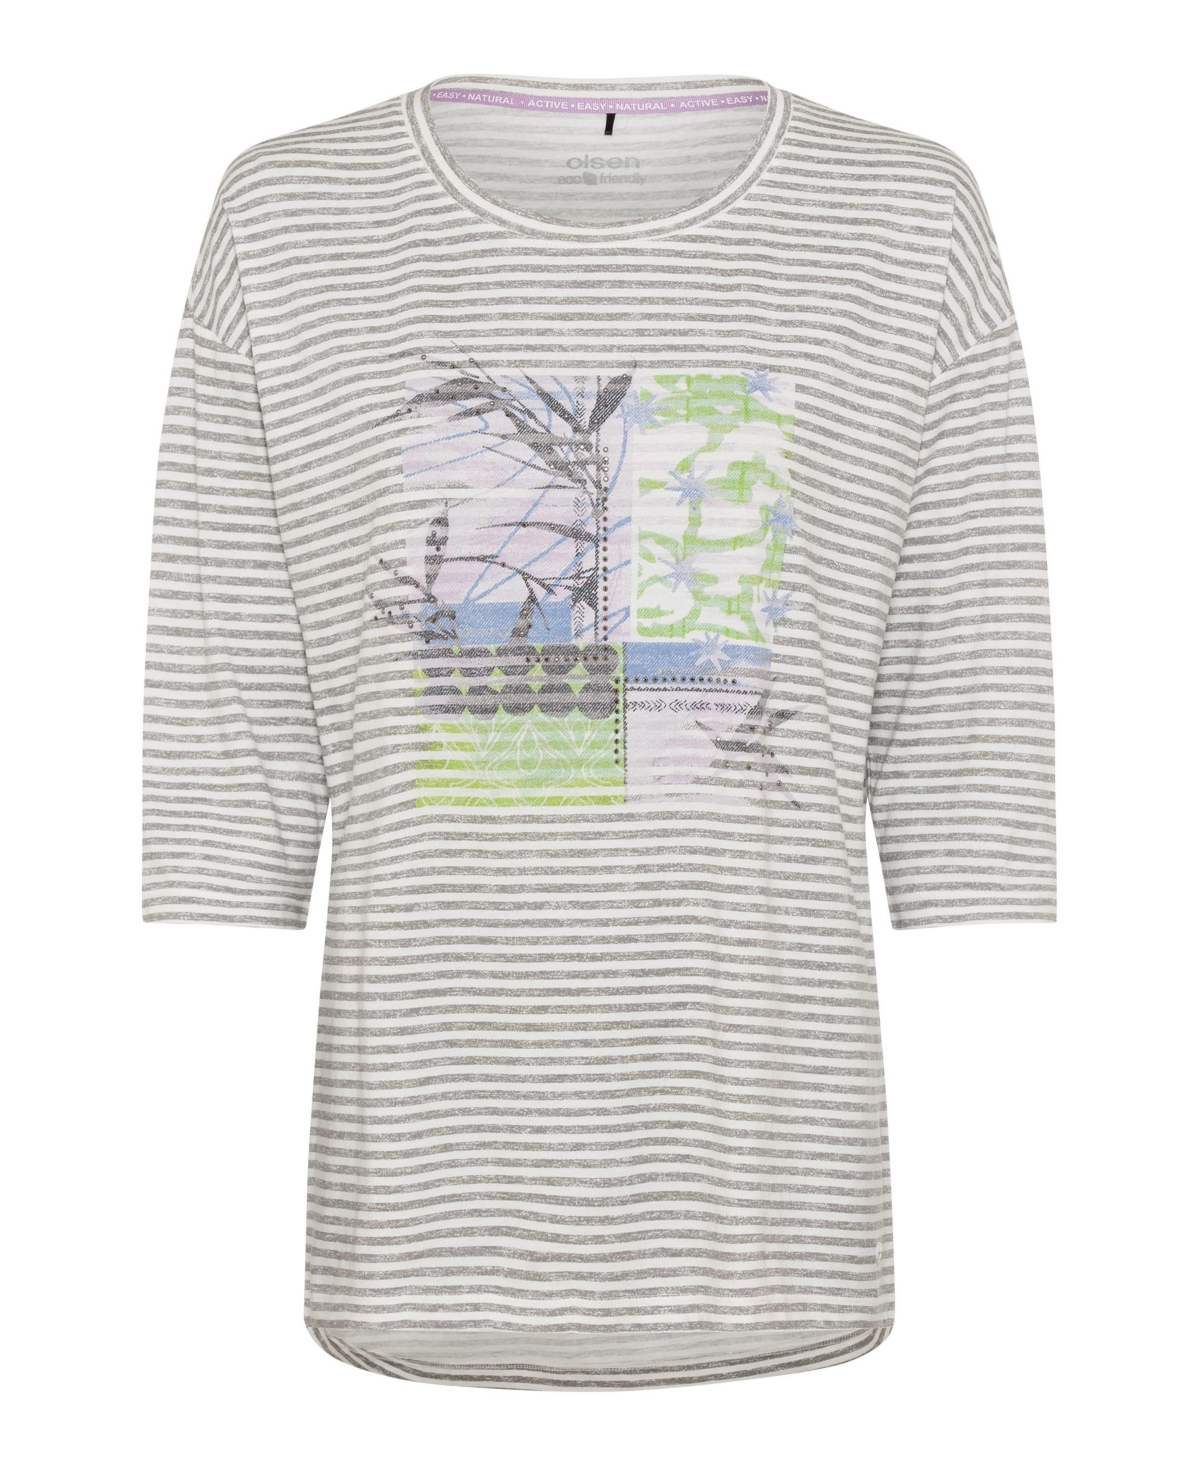 Cotton Blend Multi-Print T-Shirt containing Tencel Modal - Silver grey